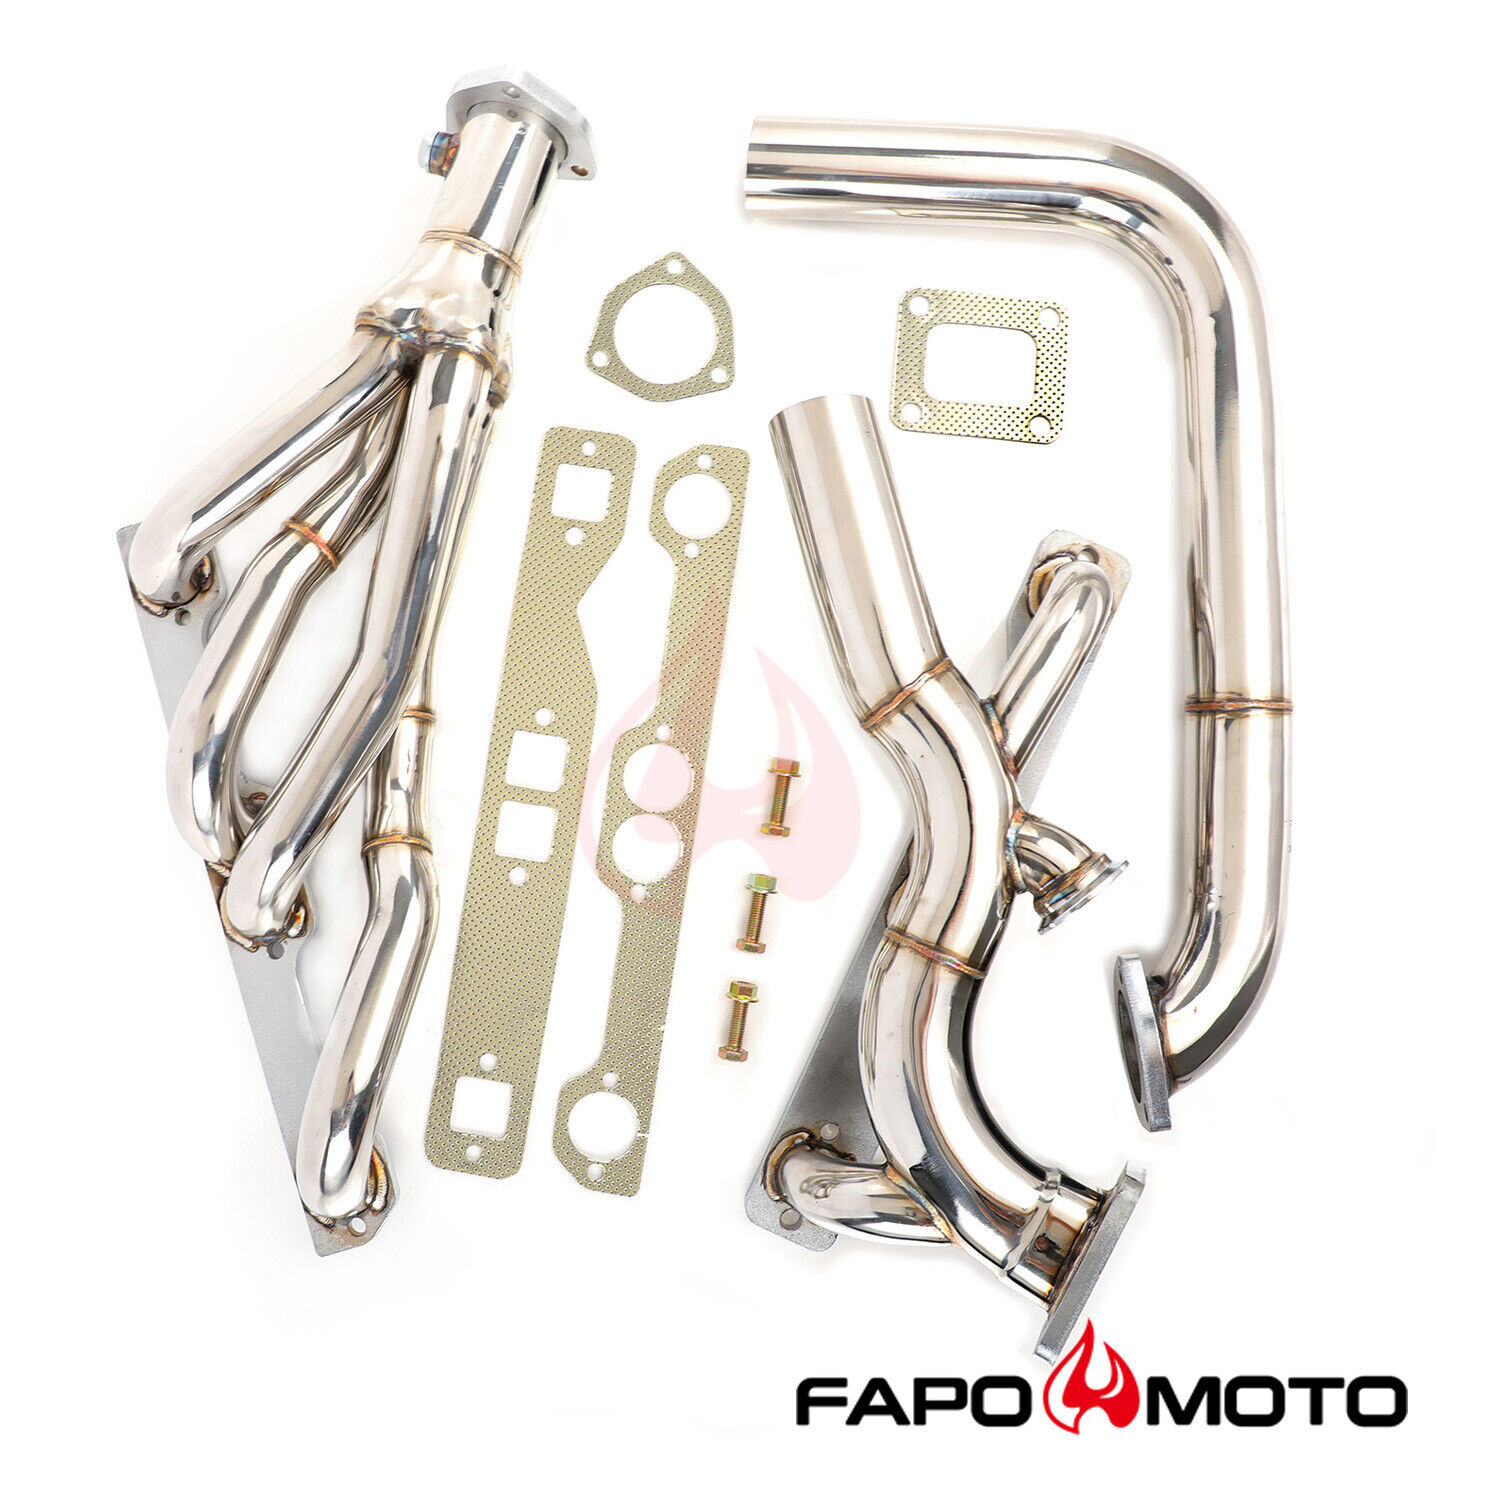 FAPO Single Turbo Headers for Chevy Nova Camaro Chevelle Caprice Small Block V8